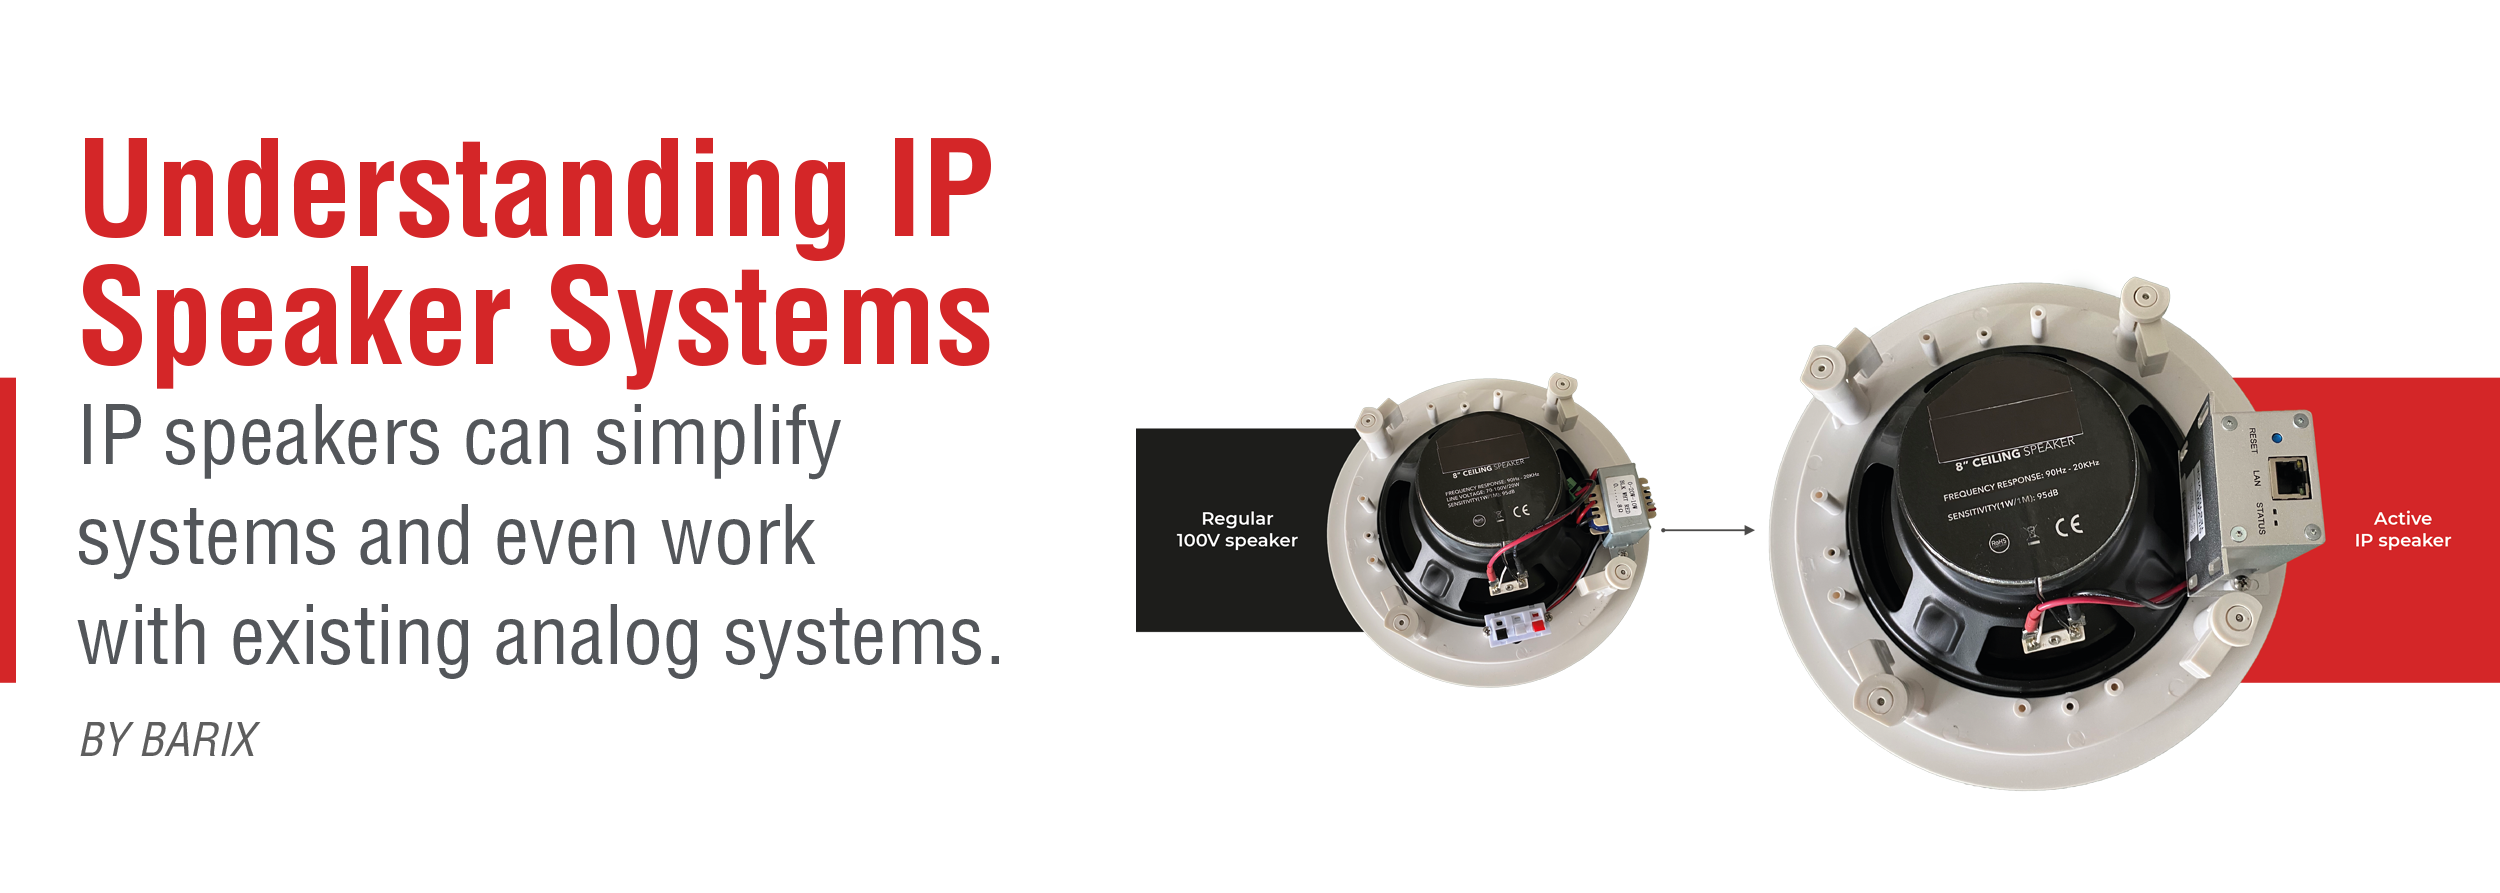 Understanding IP Speaker Systems